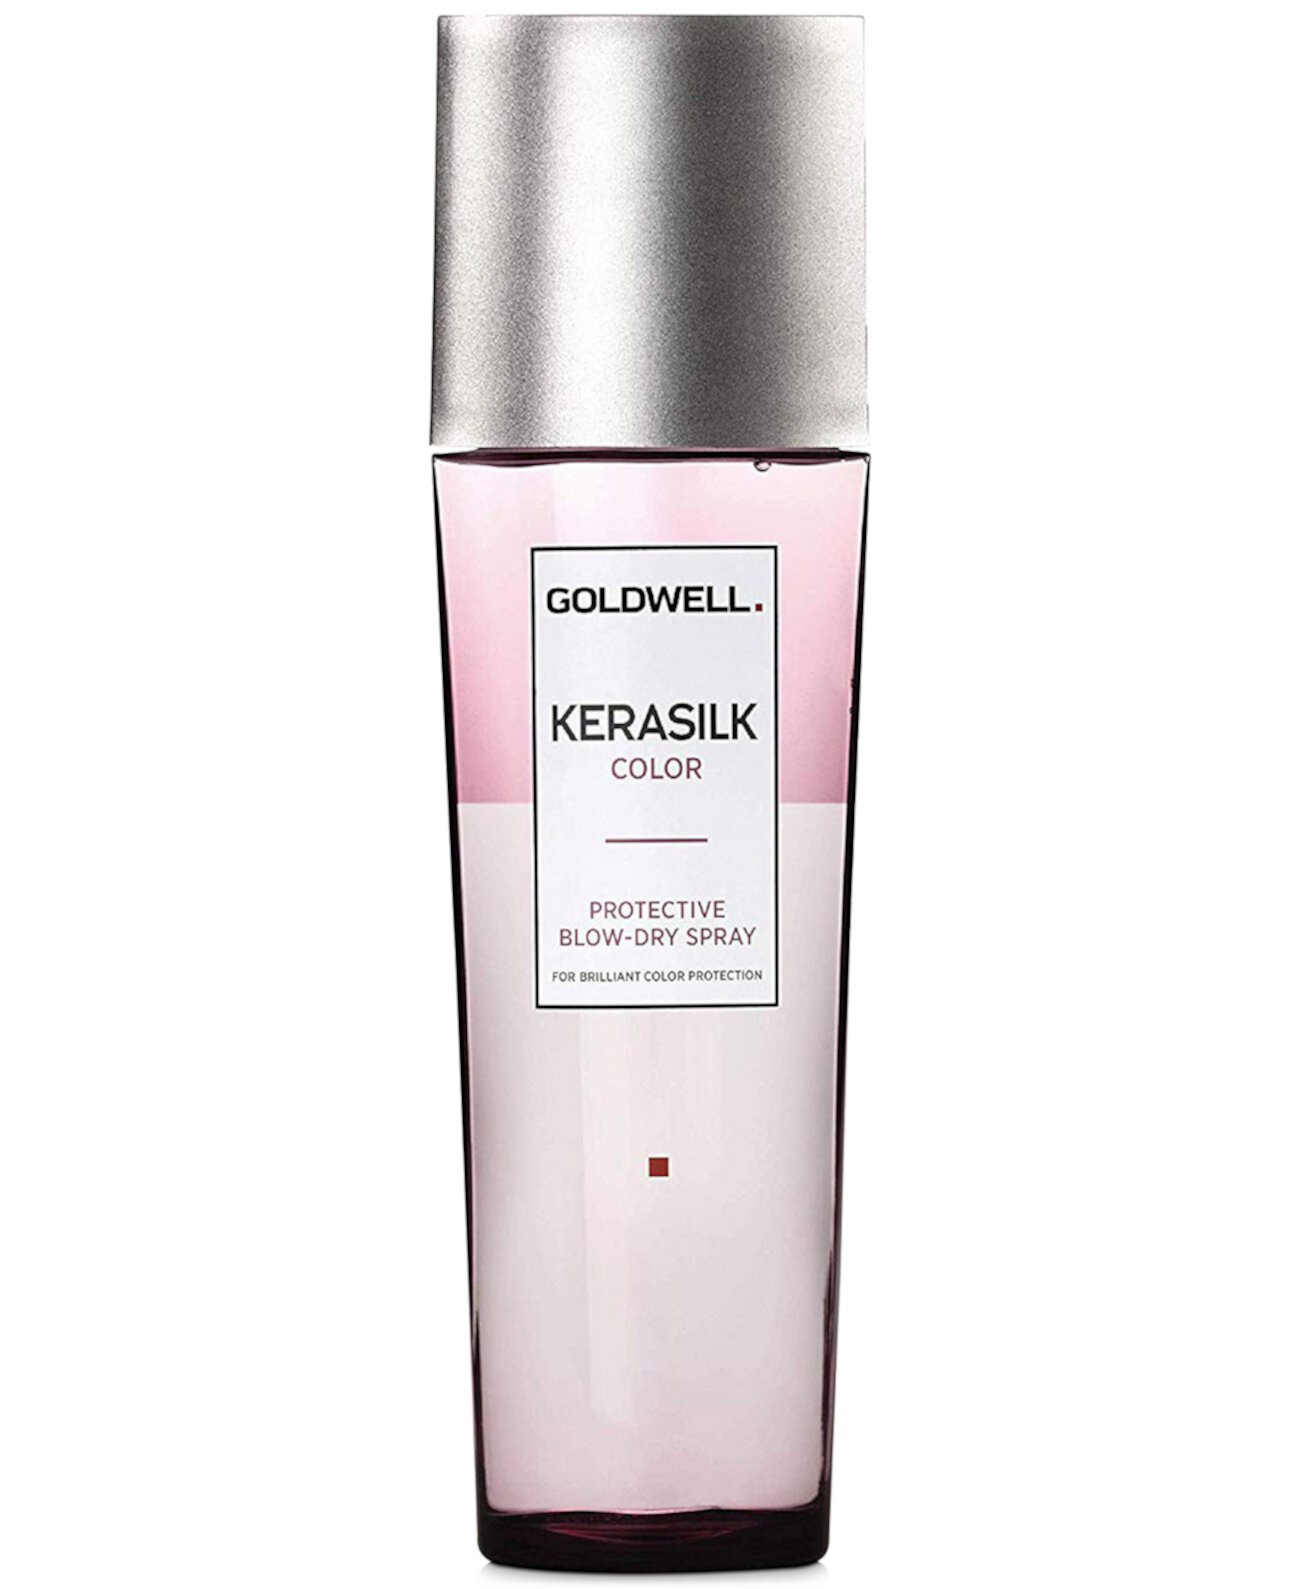 Kerasilk Color Protective Blow-Dry Spray, 4.2 унции, от PUREBEAUTY Salon & Spa Goldwell